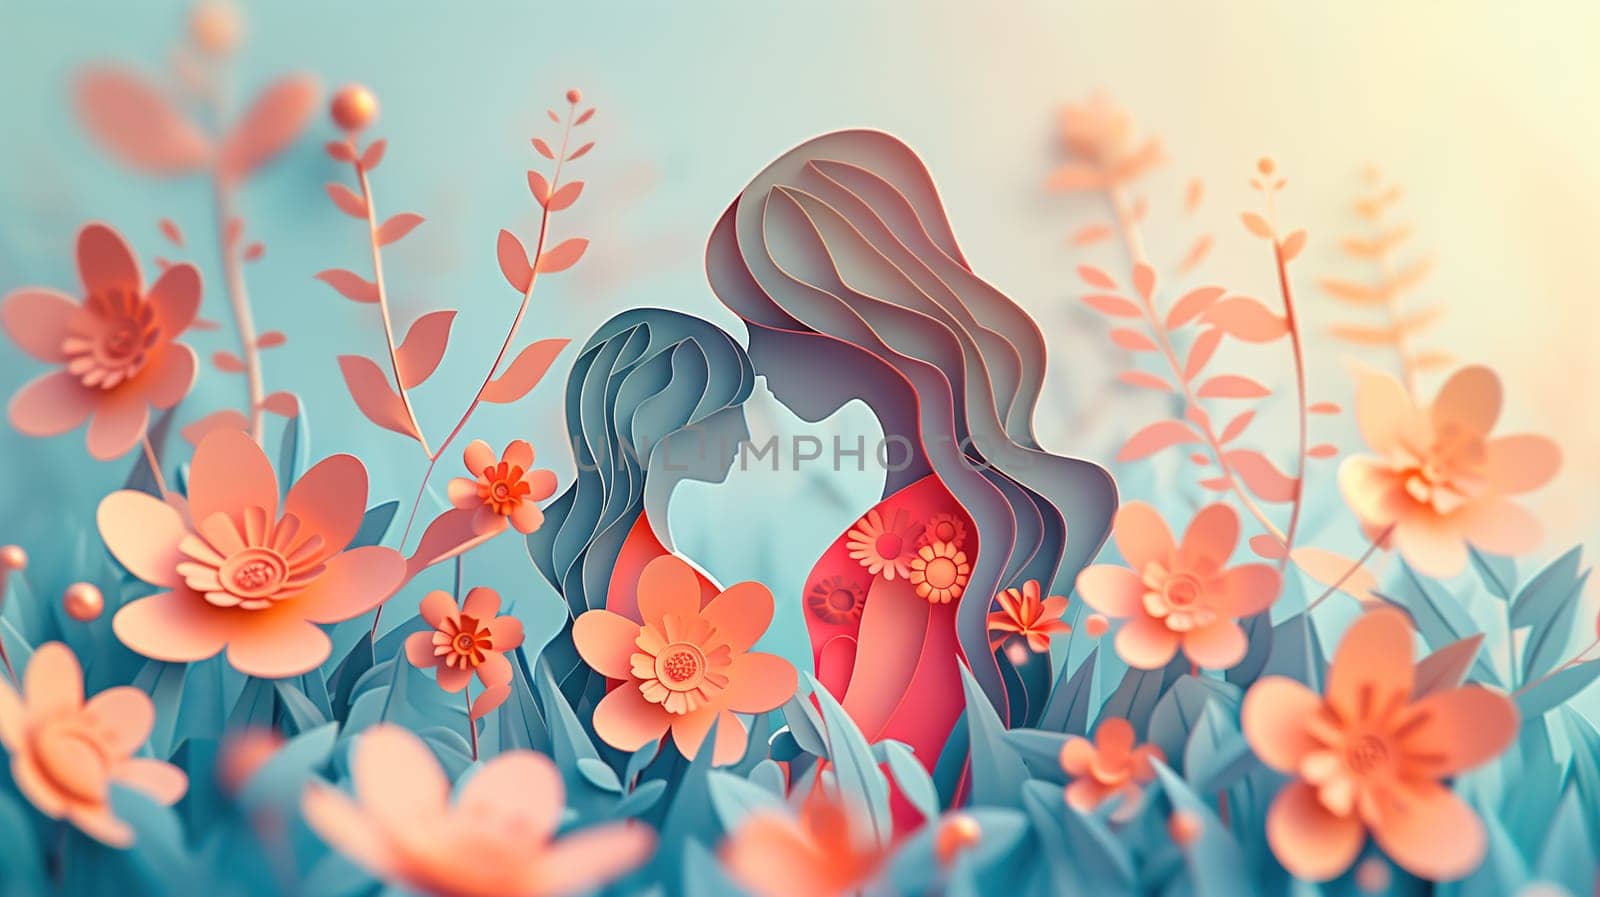 Two Women in a Field of Flowers by TRMK